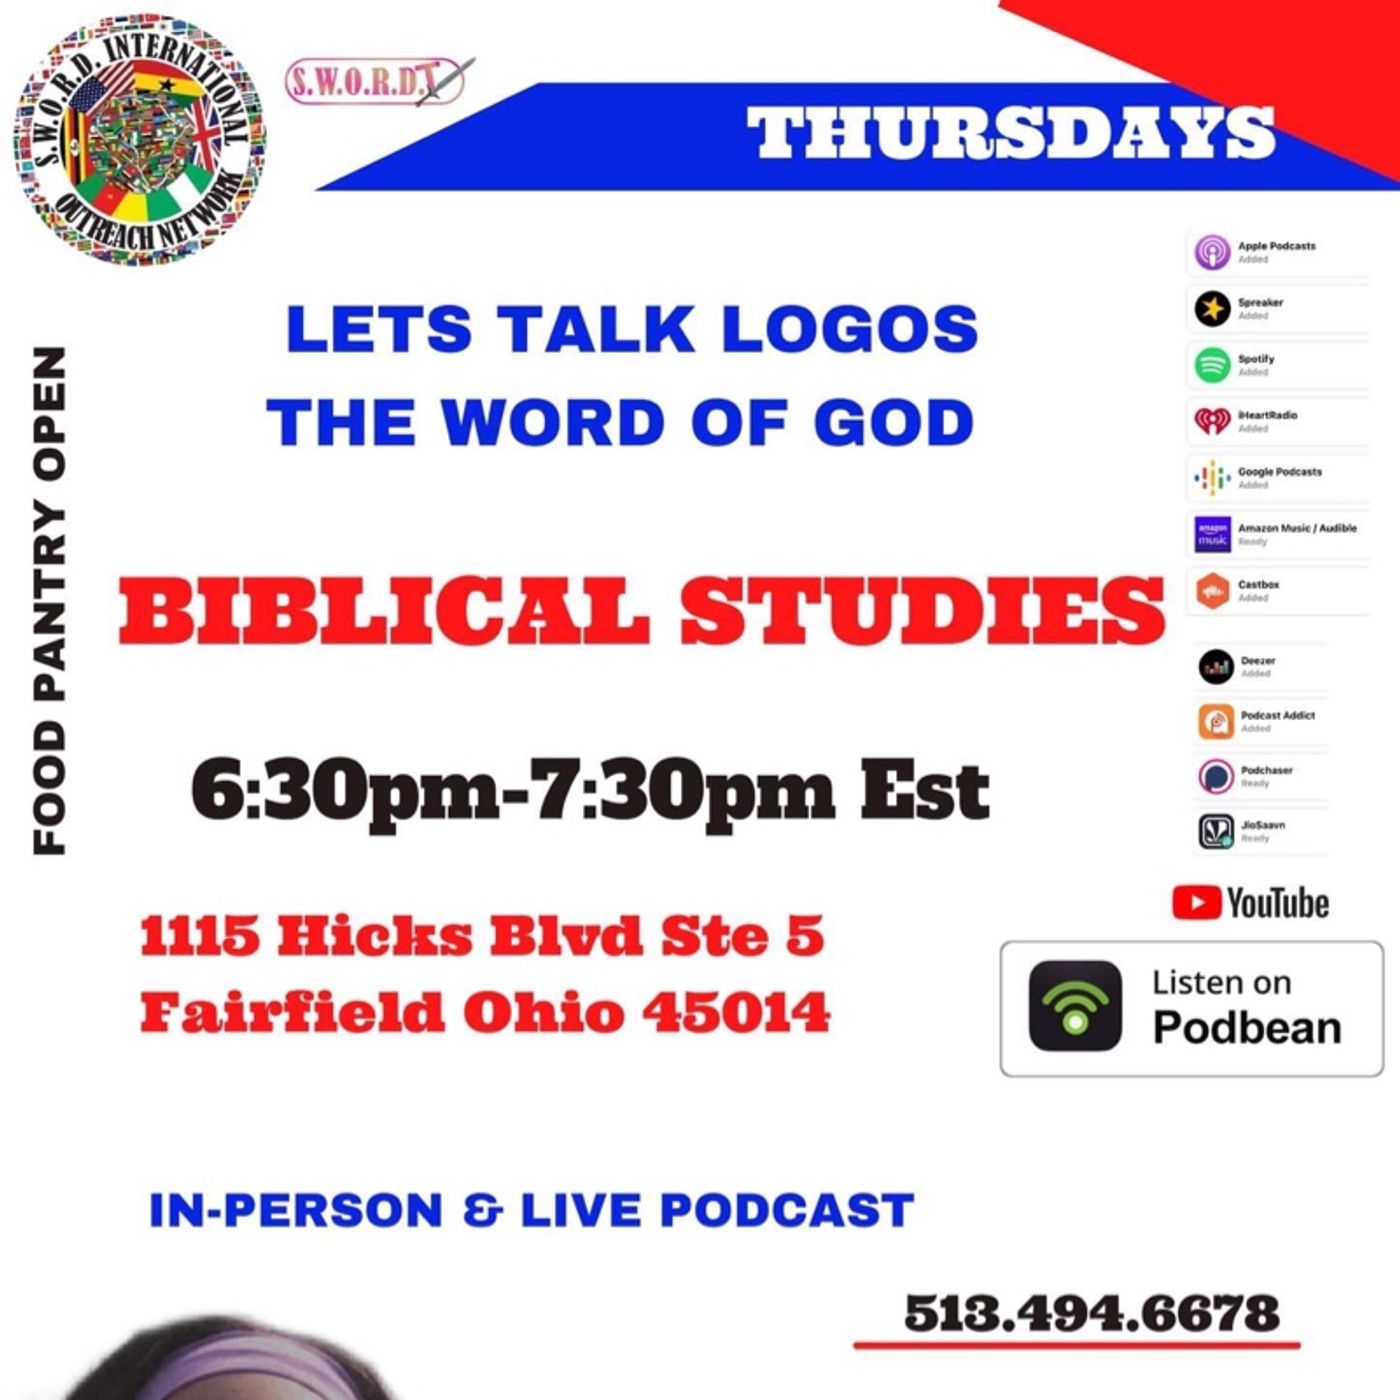 SWORD TV INTERNATIONAL-BIBLICAL STUDIES